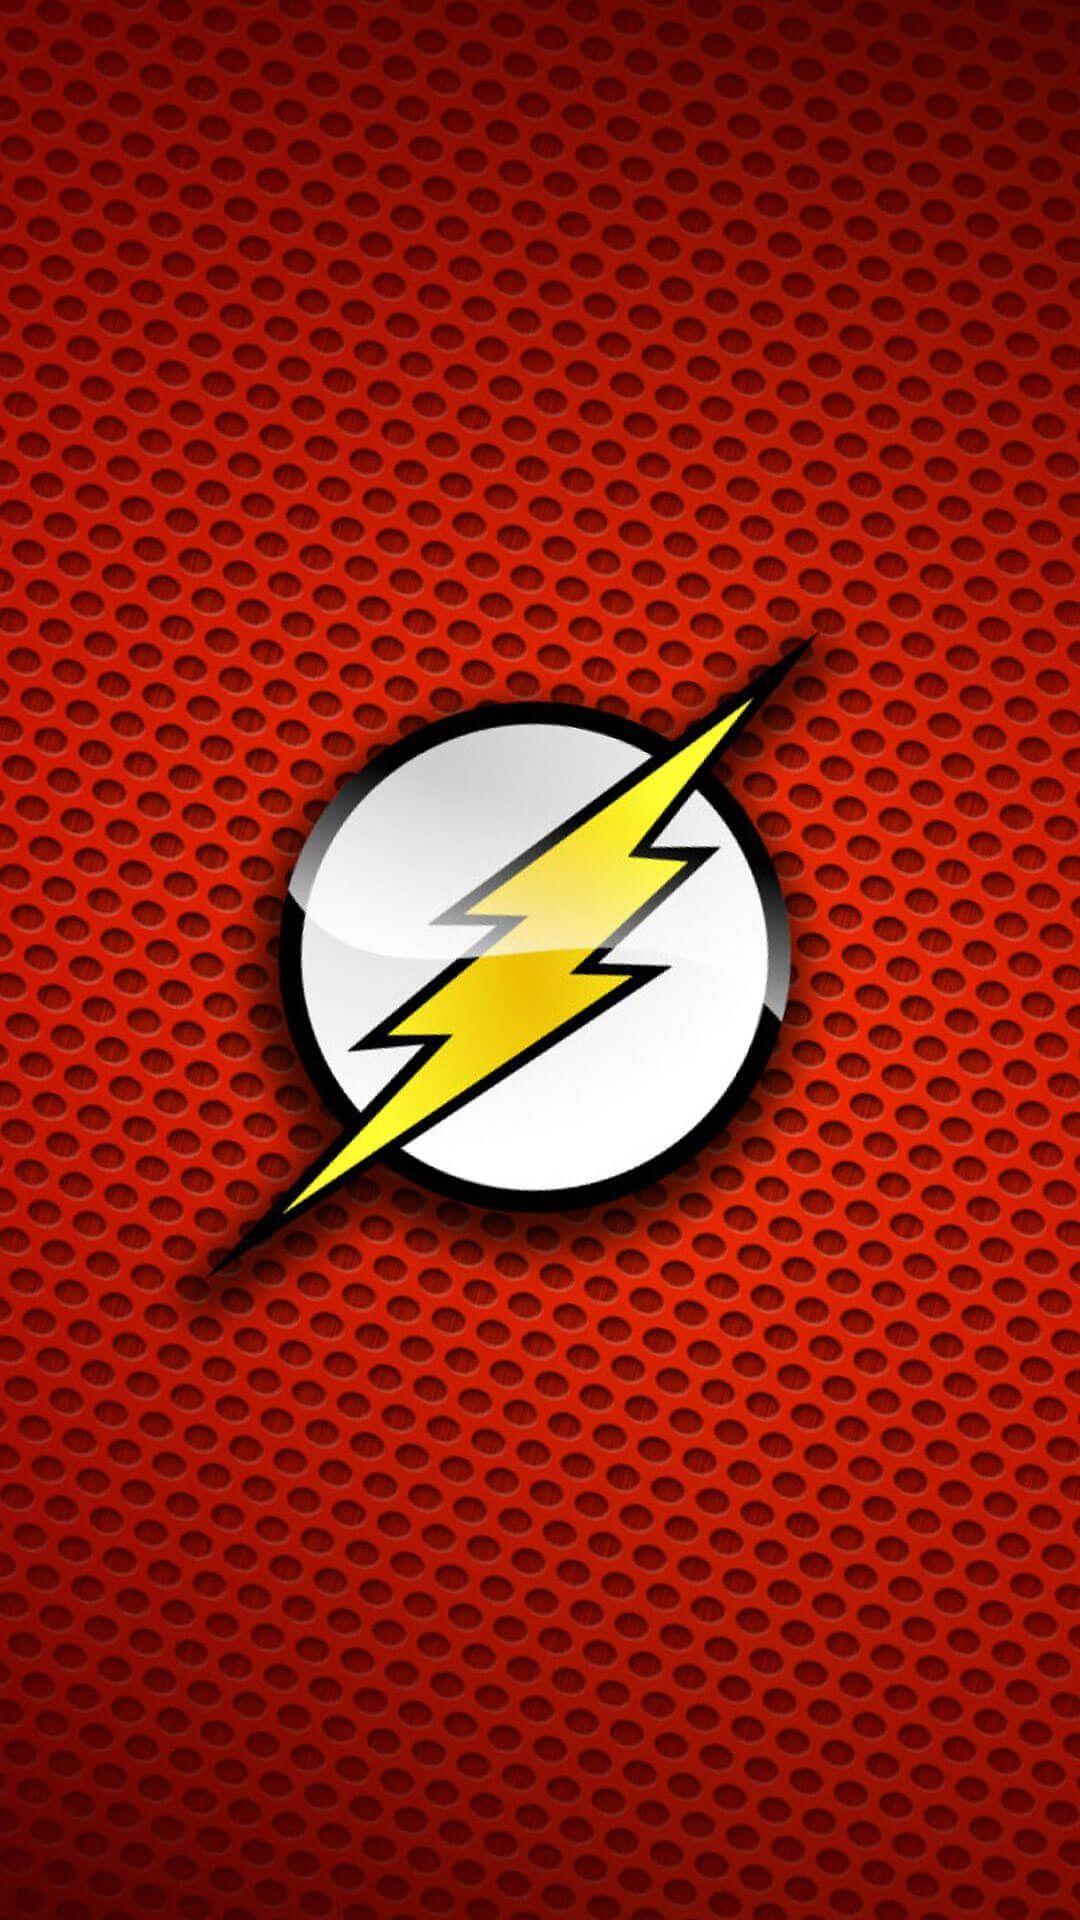 The Flash Logo iPhone 6 Wallpaper Wallpaper iPhone